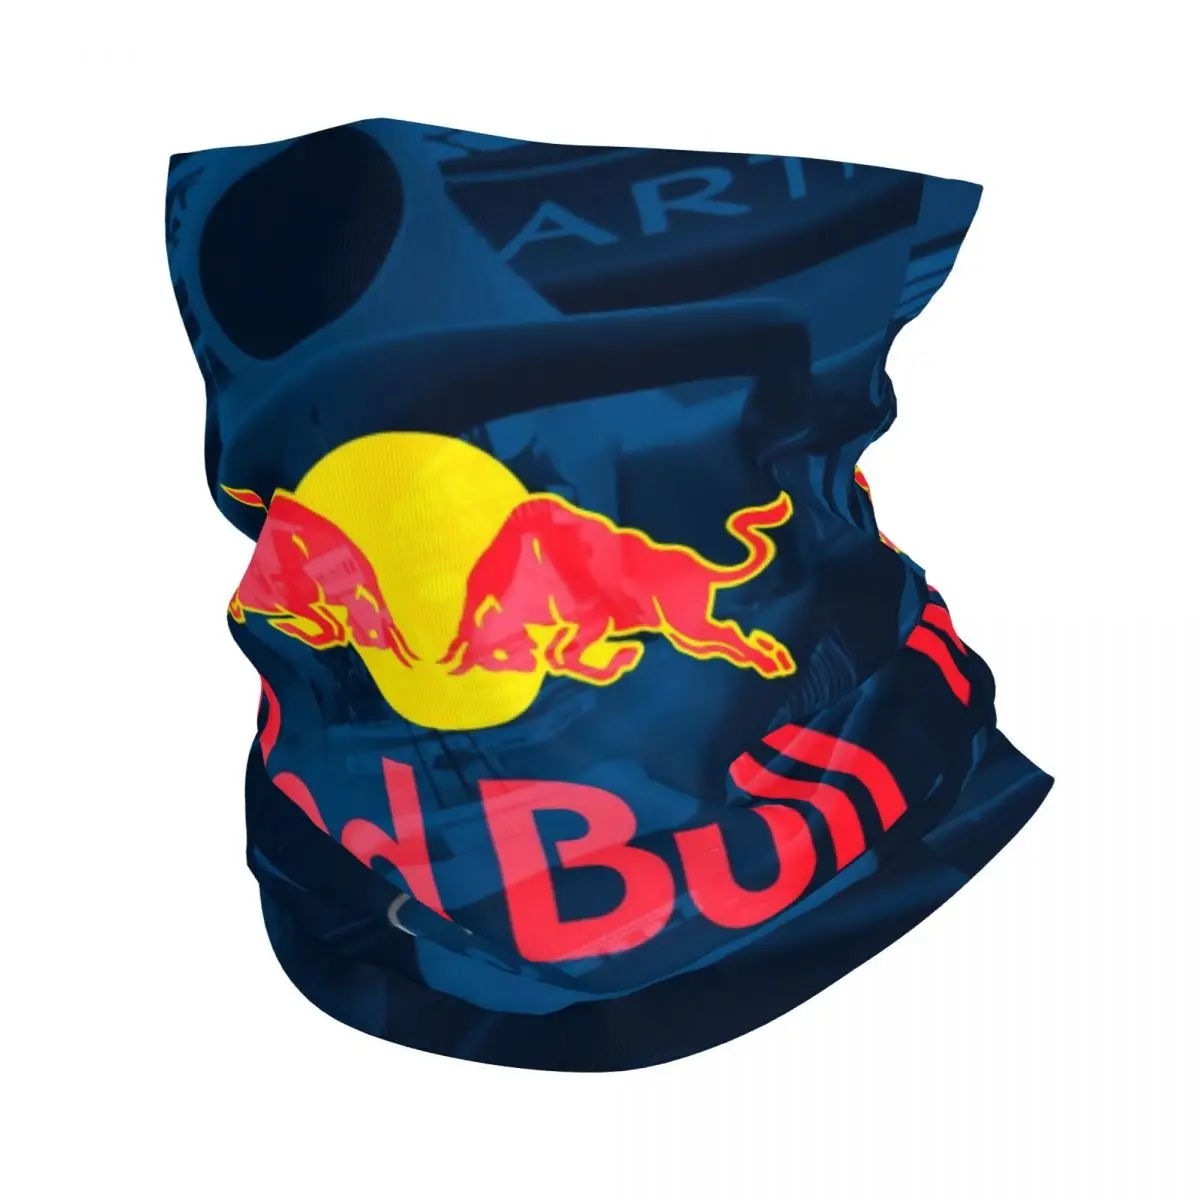 

Red Double Bull Bandana Neck Cover Printed Balaclavas Mask Scarf Warm Headwear Hiking Unisex Adult Washable